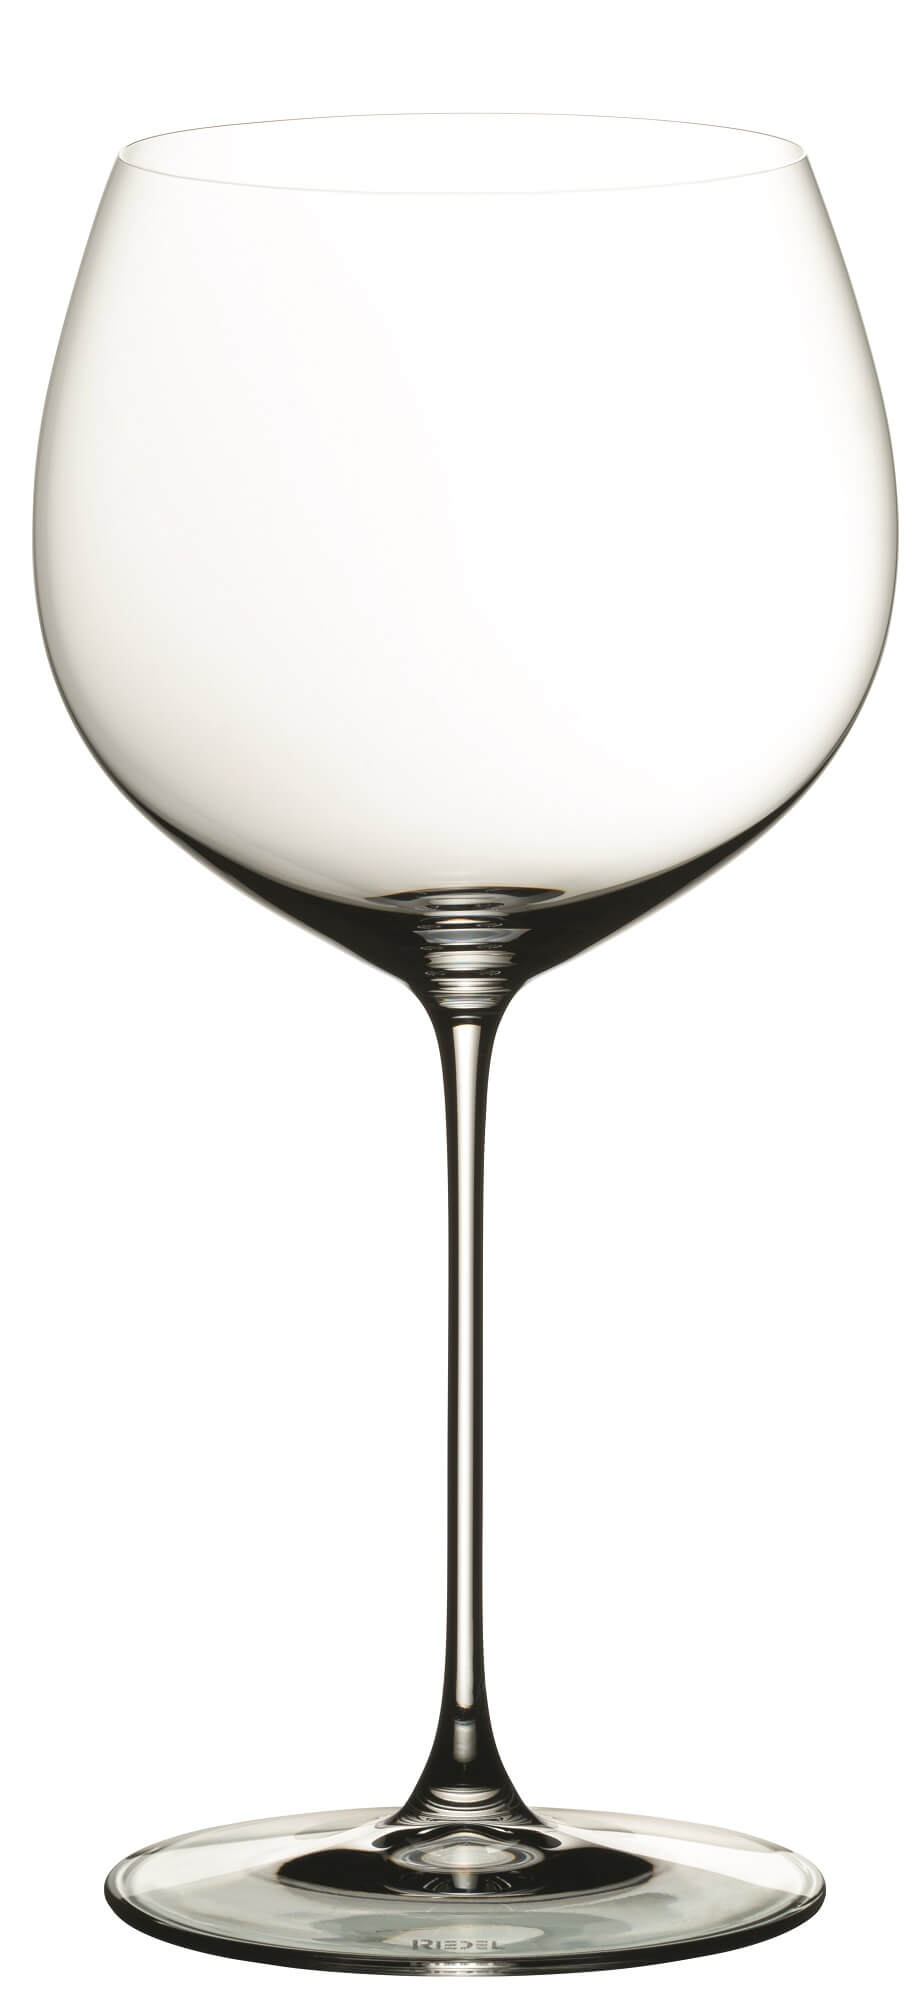 Oaked Chardonnay Glas Veritas, Riedel - 620ml (2 Stk.)